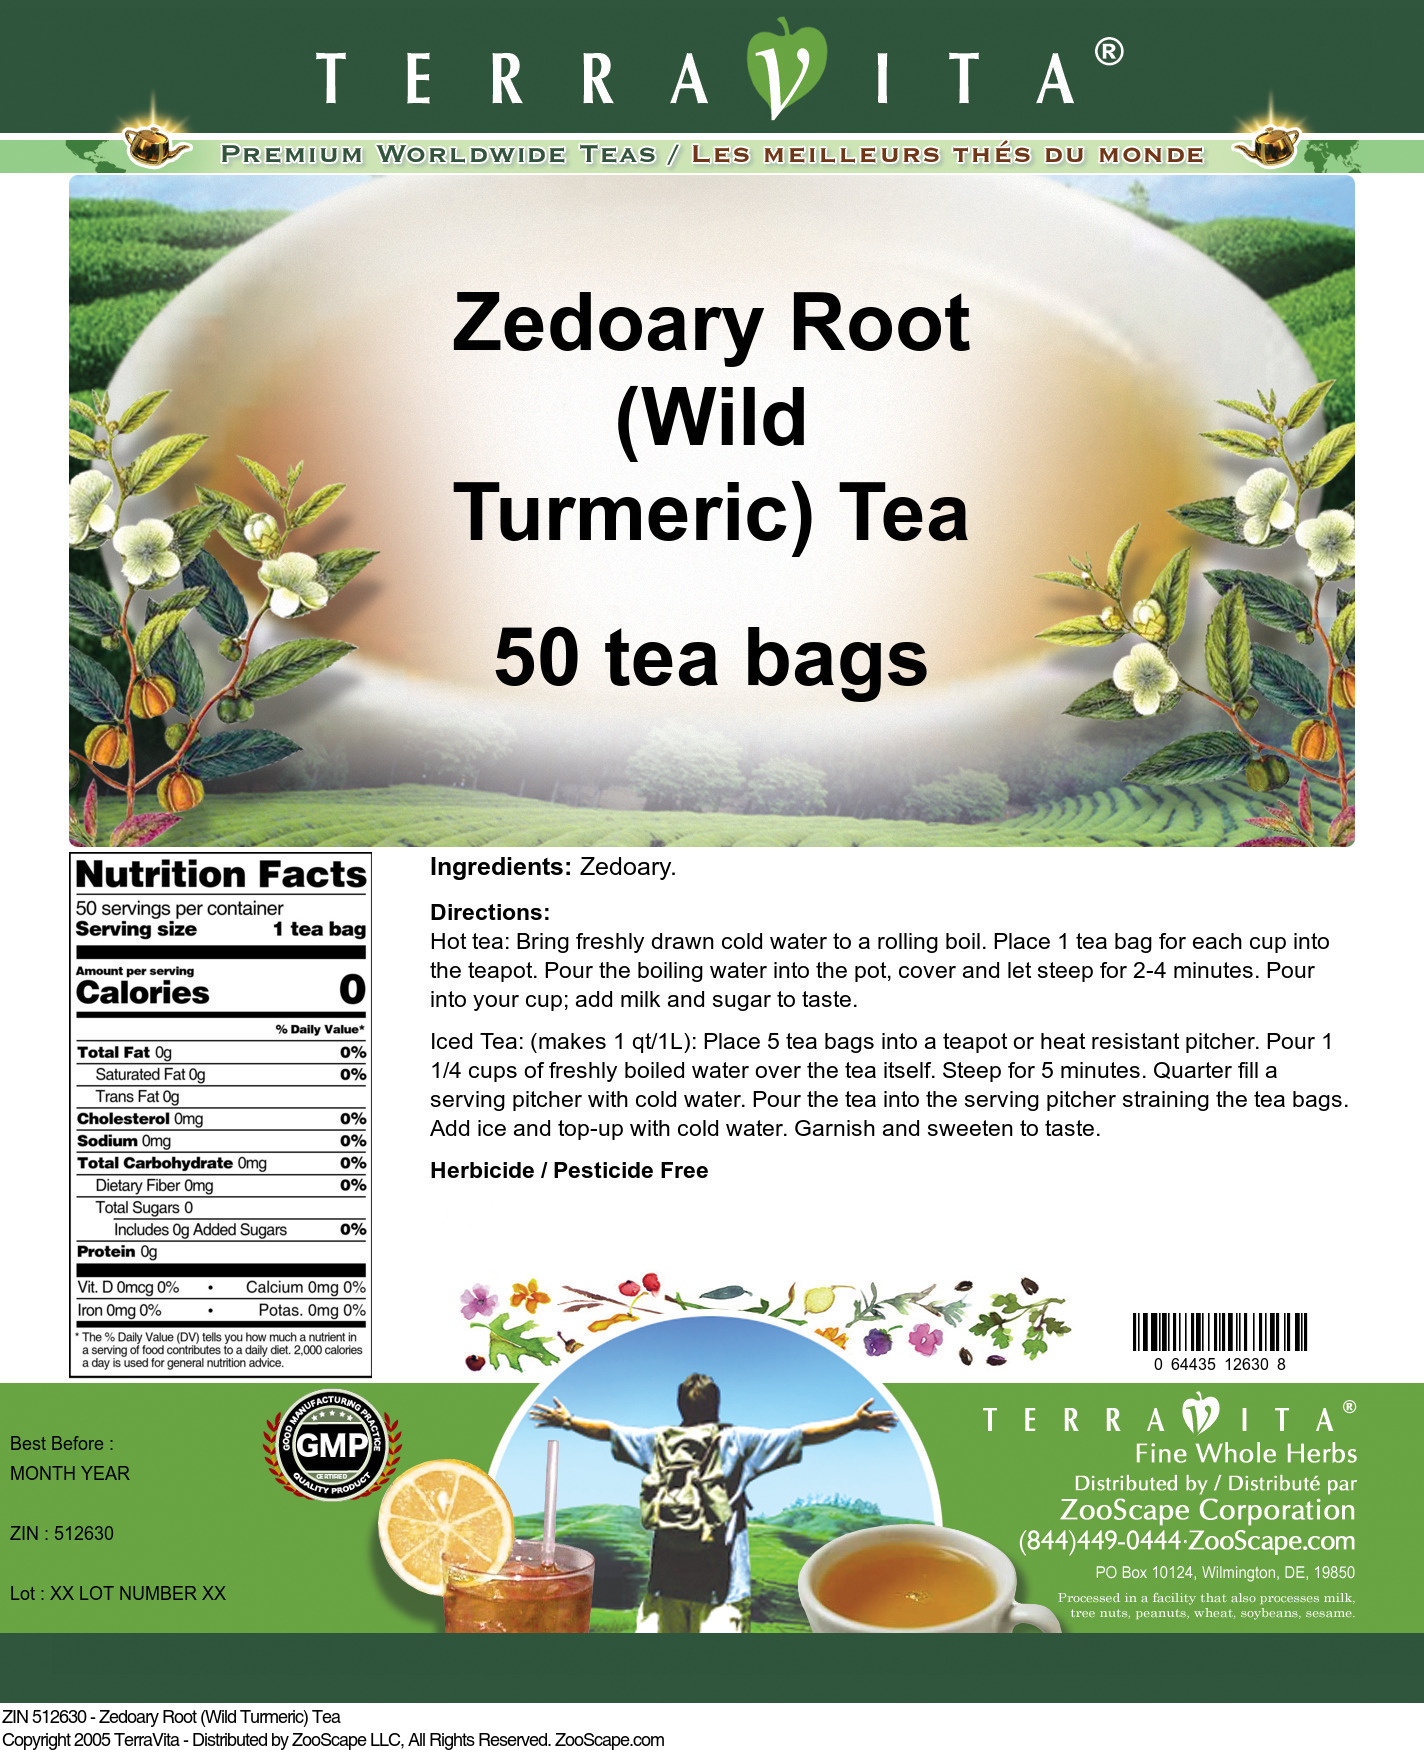 Zedoary Root (Wild Turmeric) Tea - Label